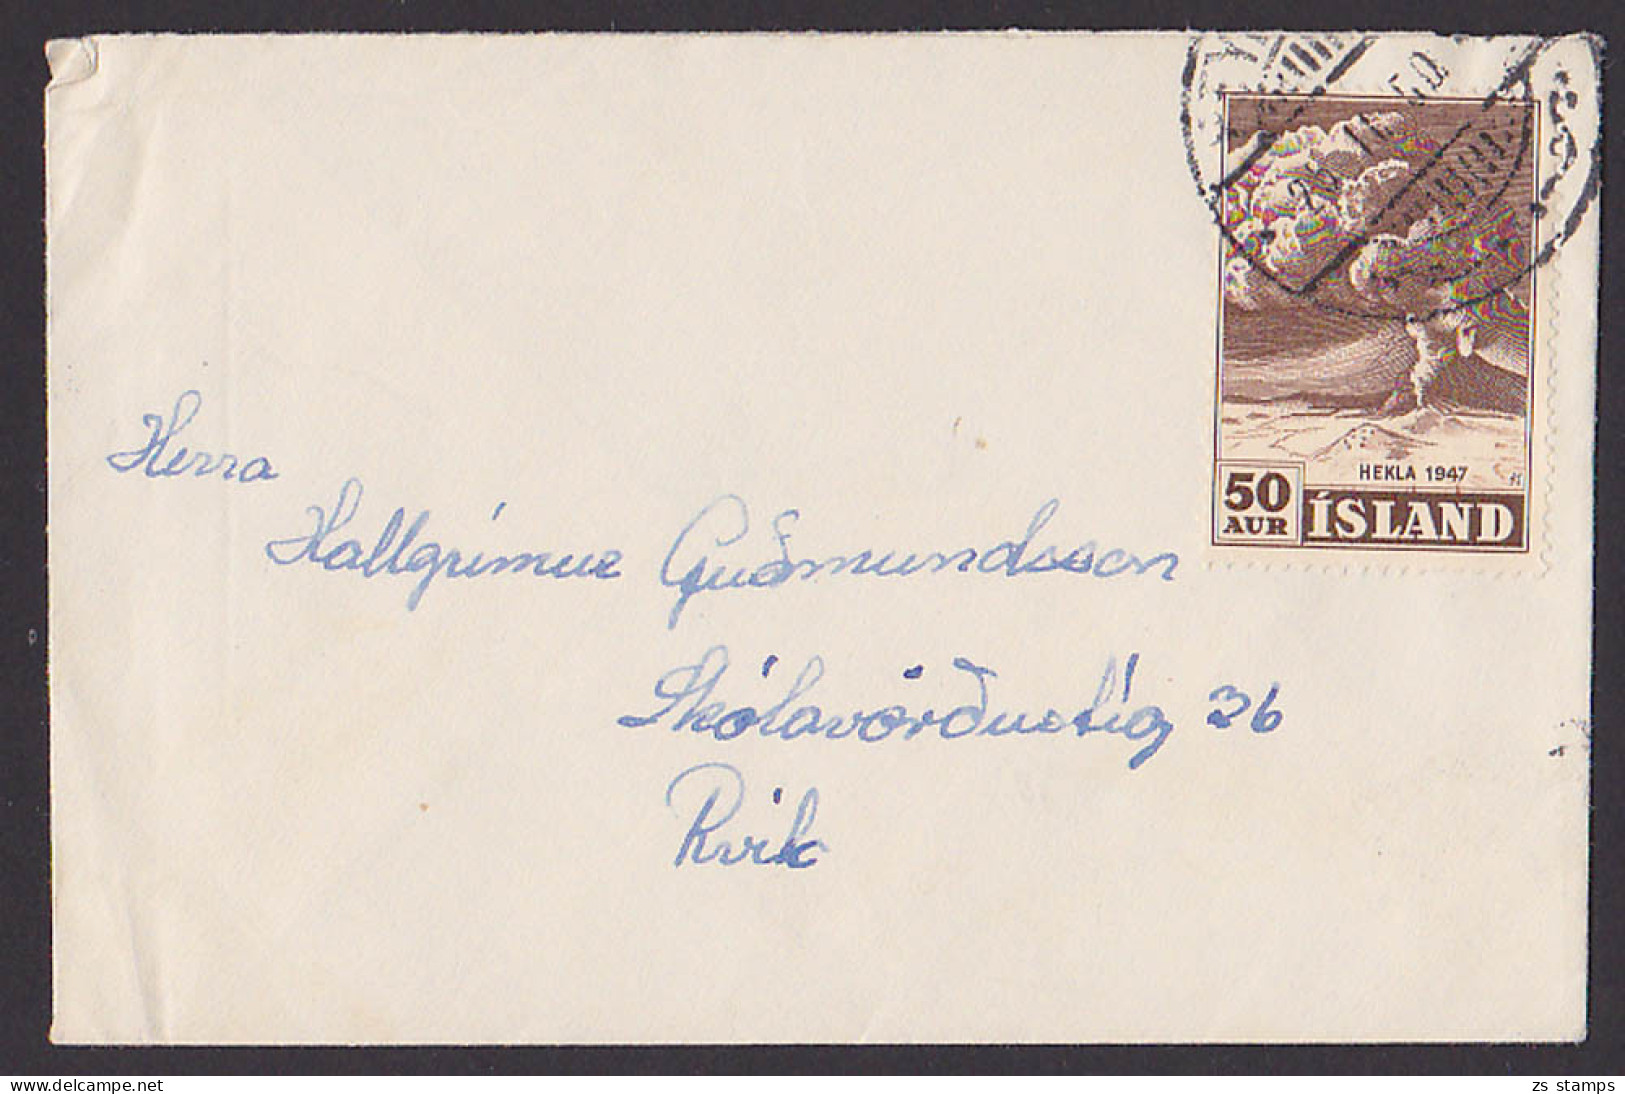 Island 50 AUR Hekla 1947 Lettre Cover Vulkan Minibrief - Lettres & Documents